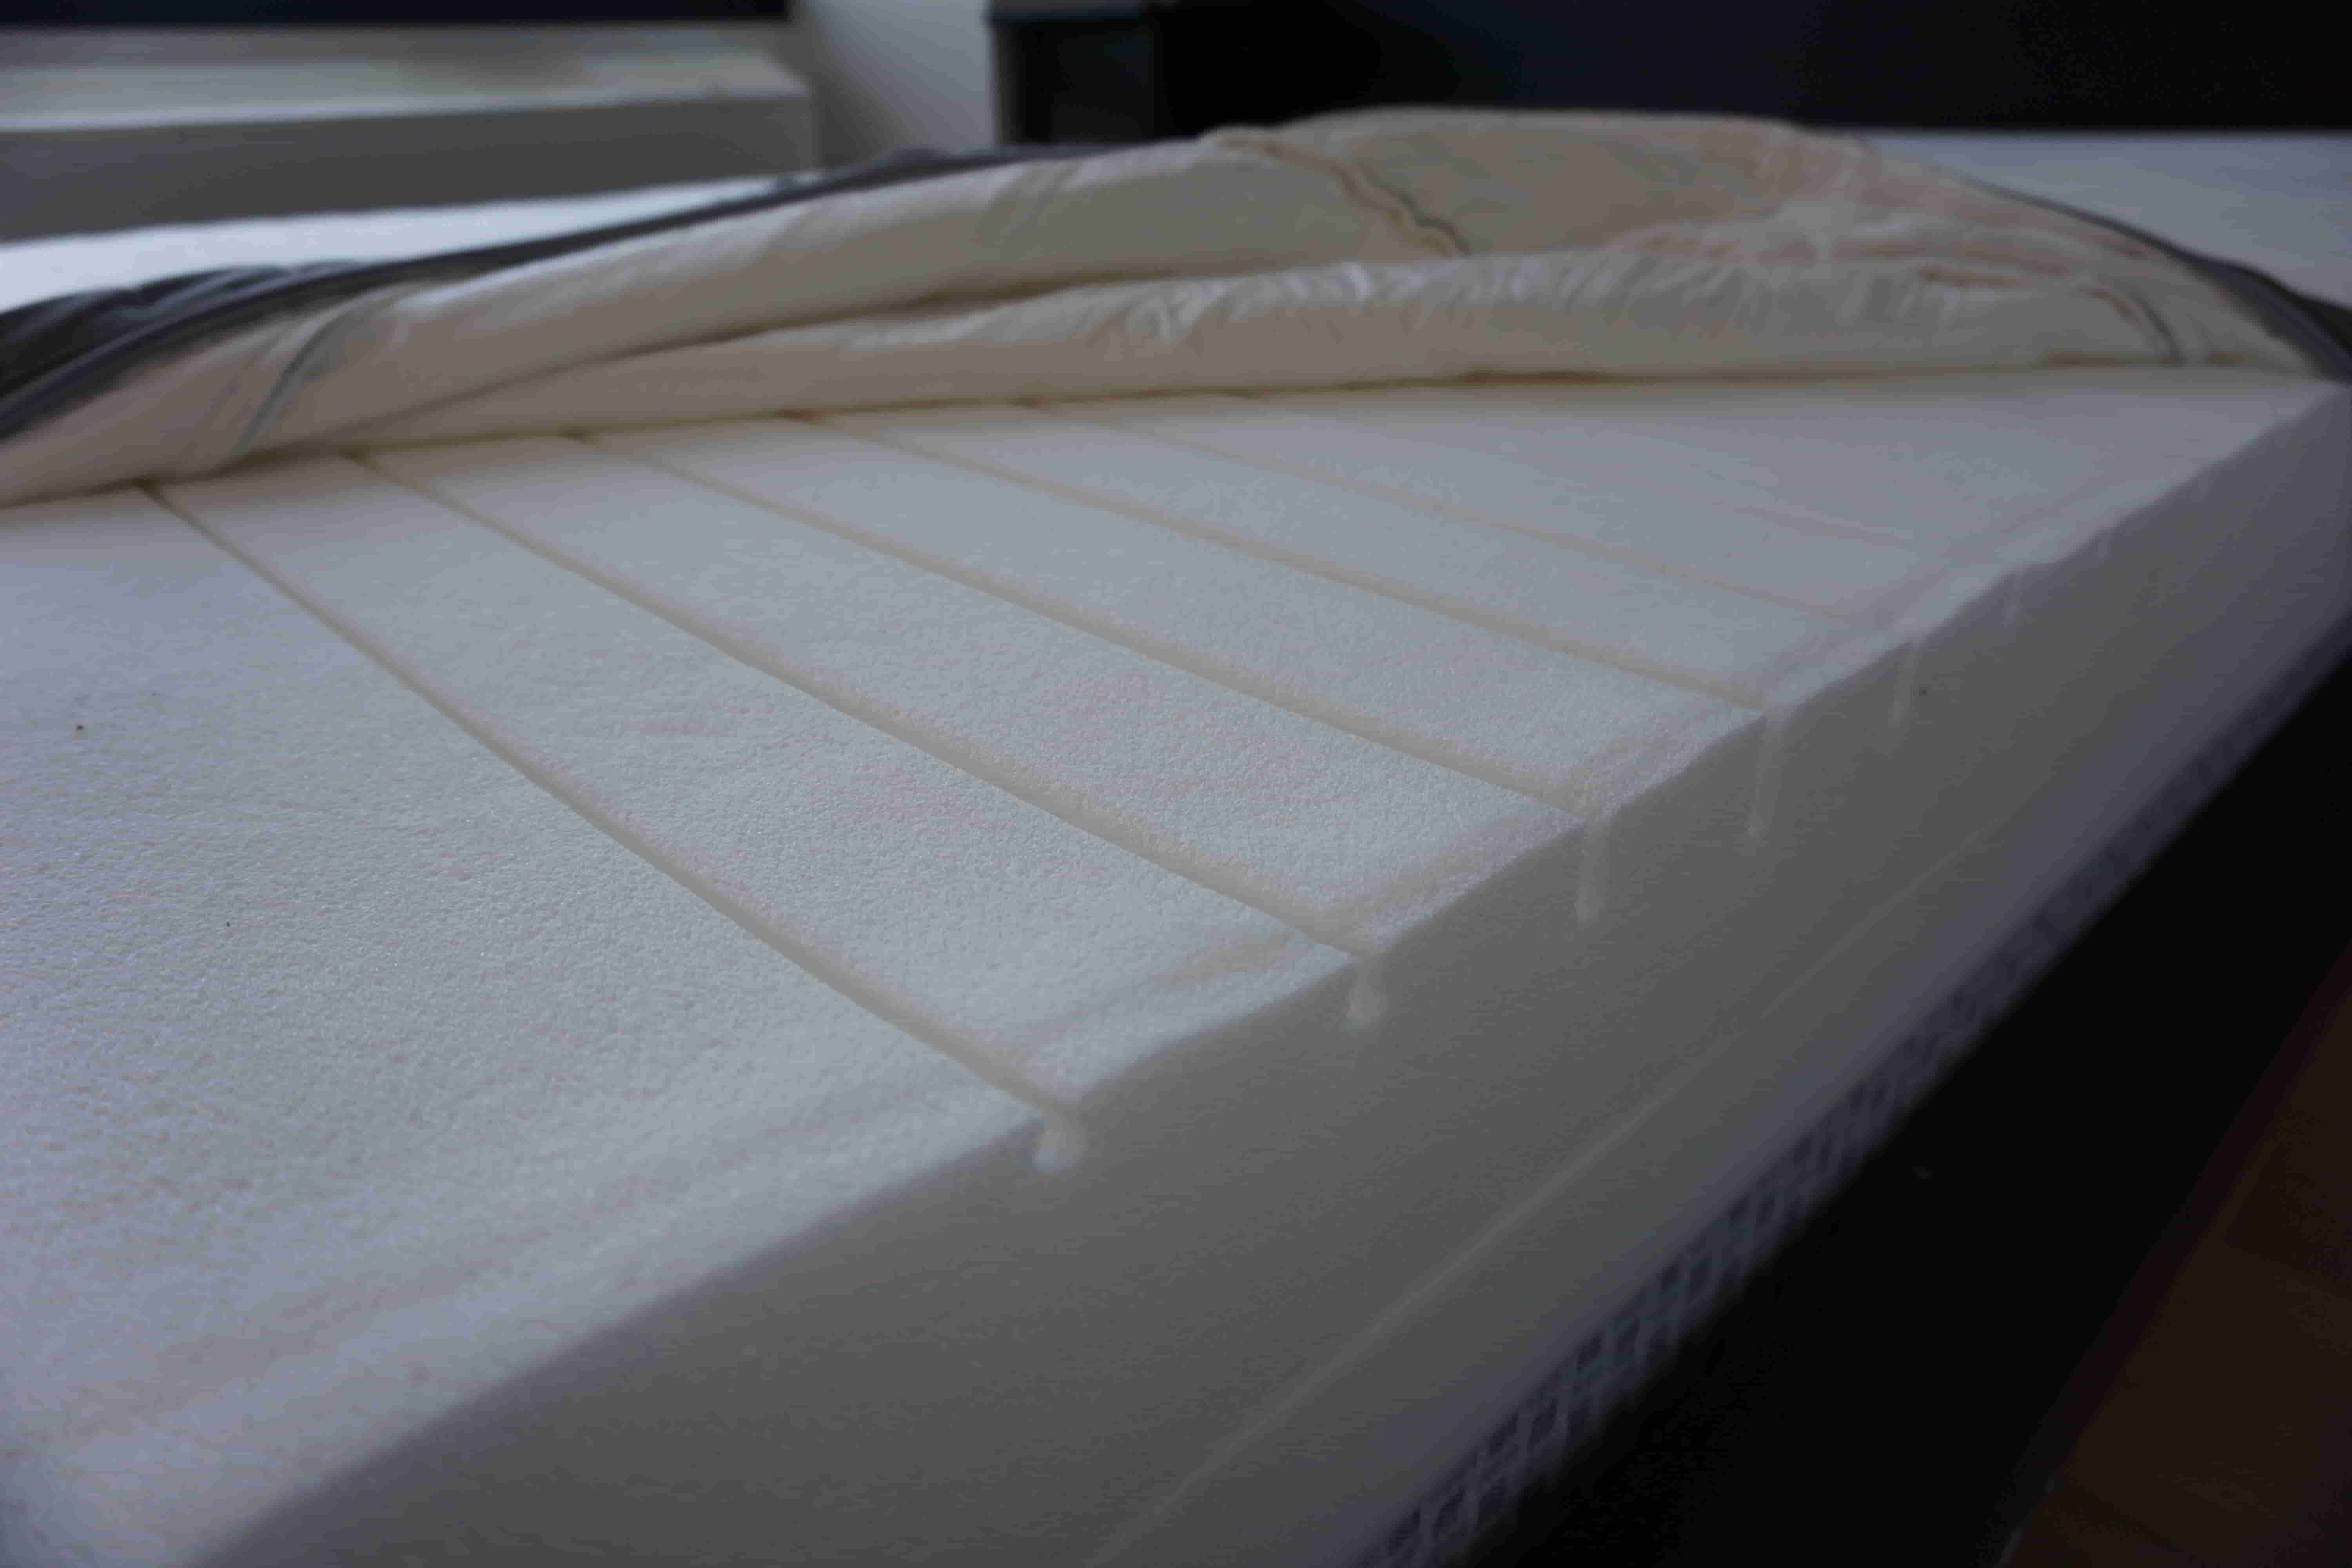 morgedal foam mattress used full size